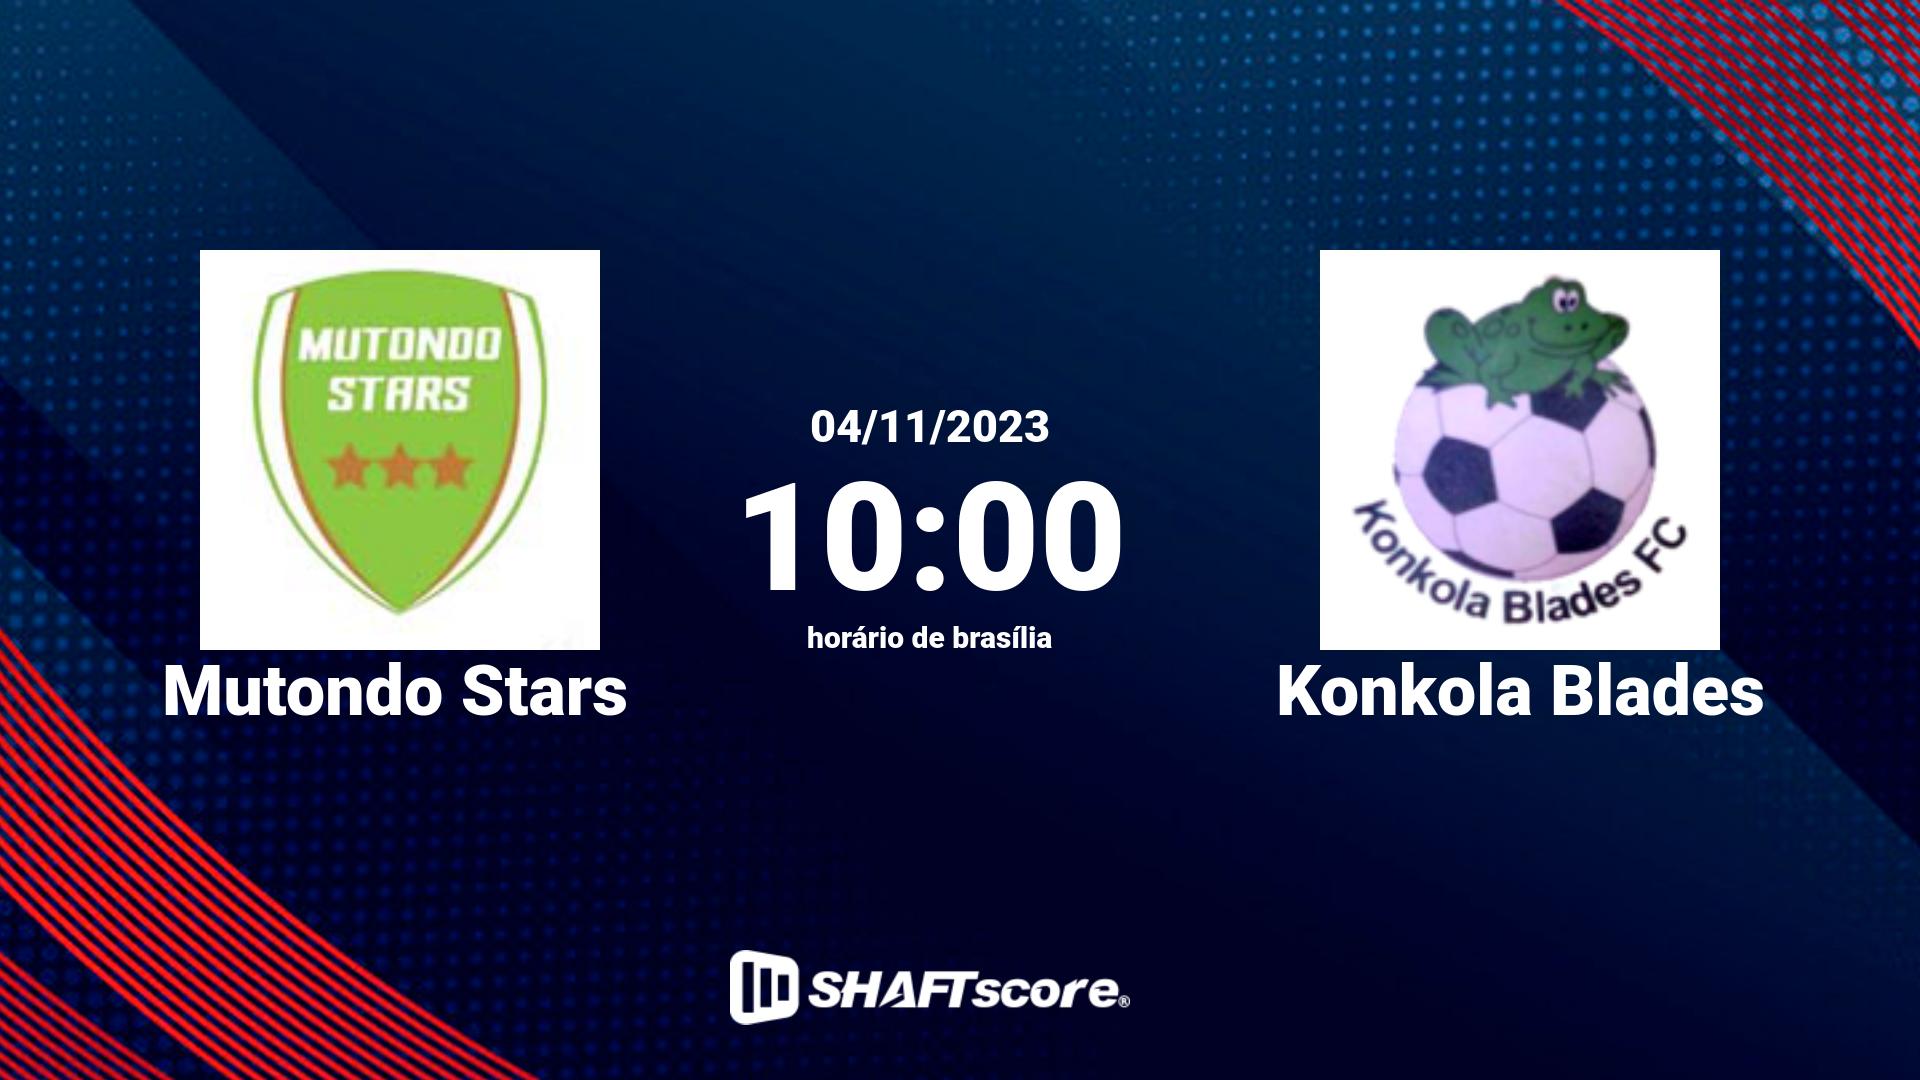 Estatísticas do jogo Mutondo Stars vs Konkola Blades 04.11 10:00